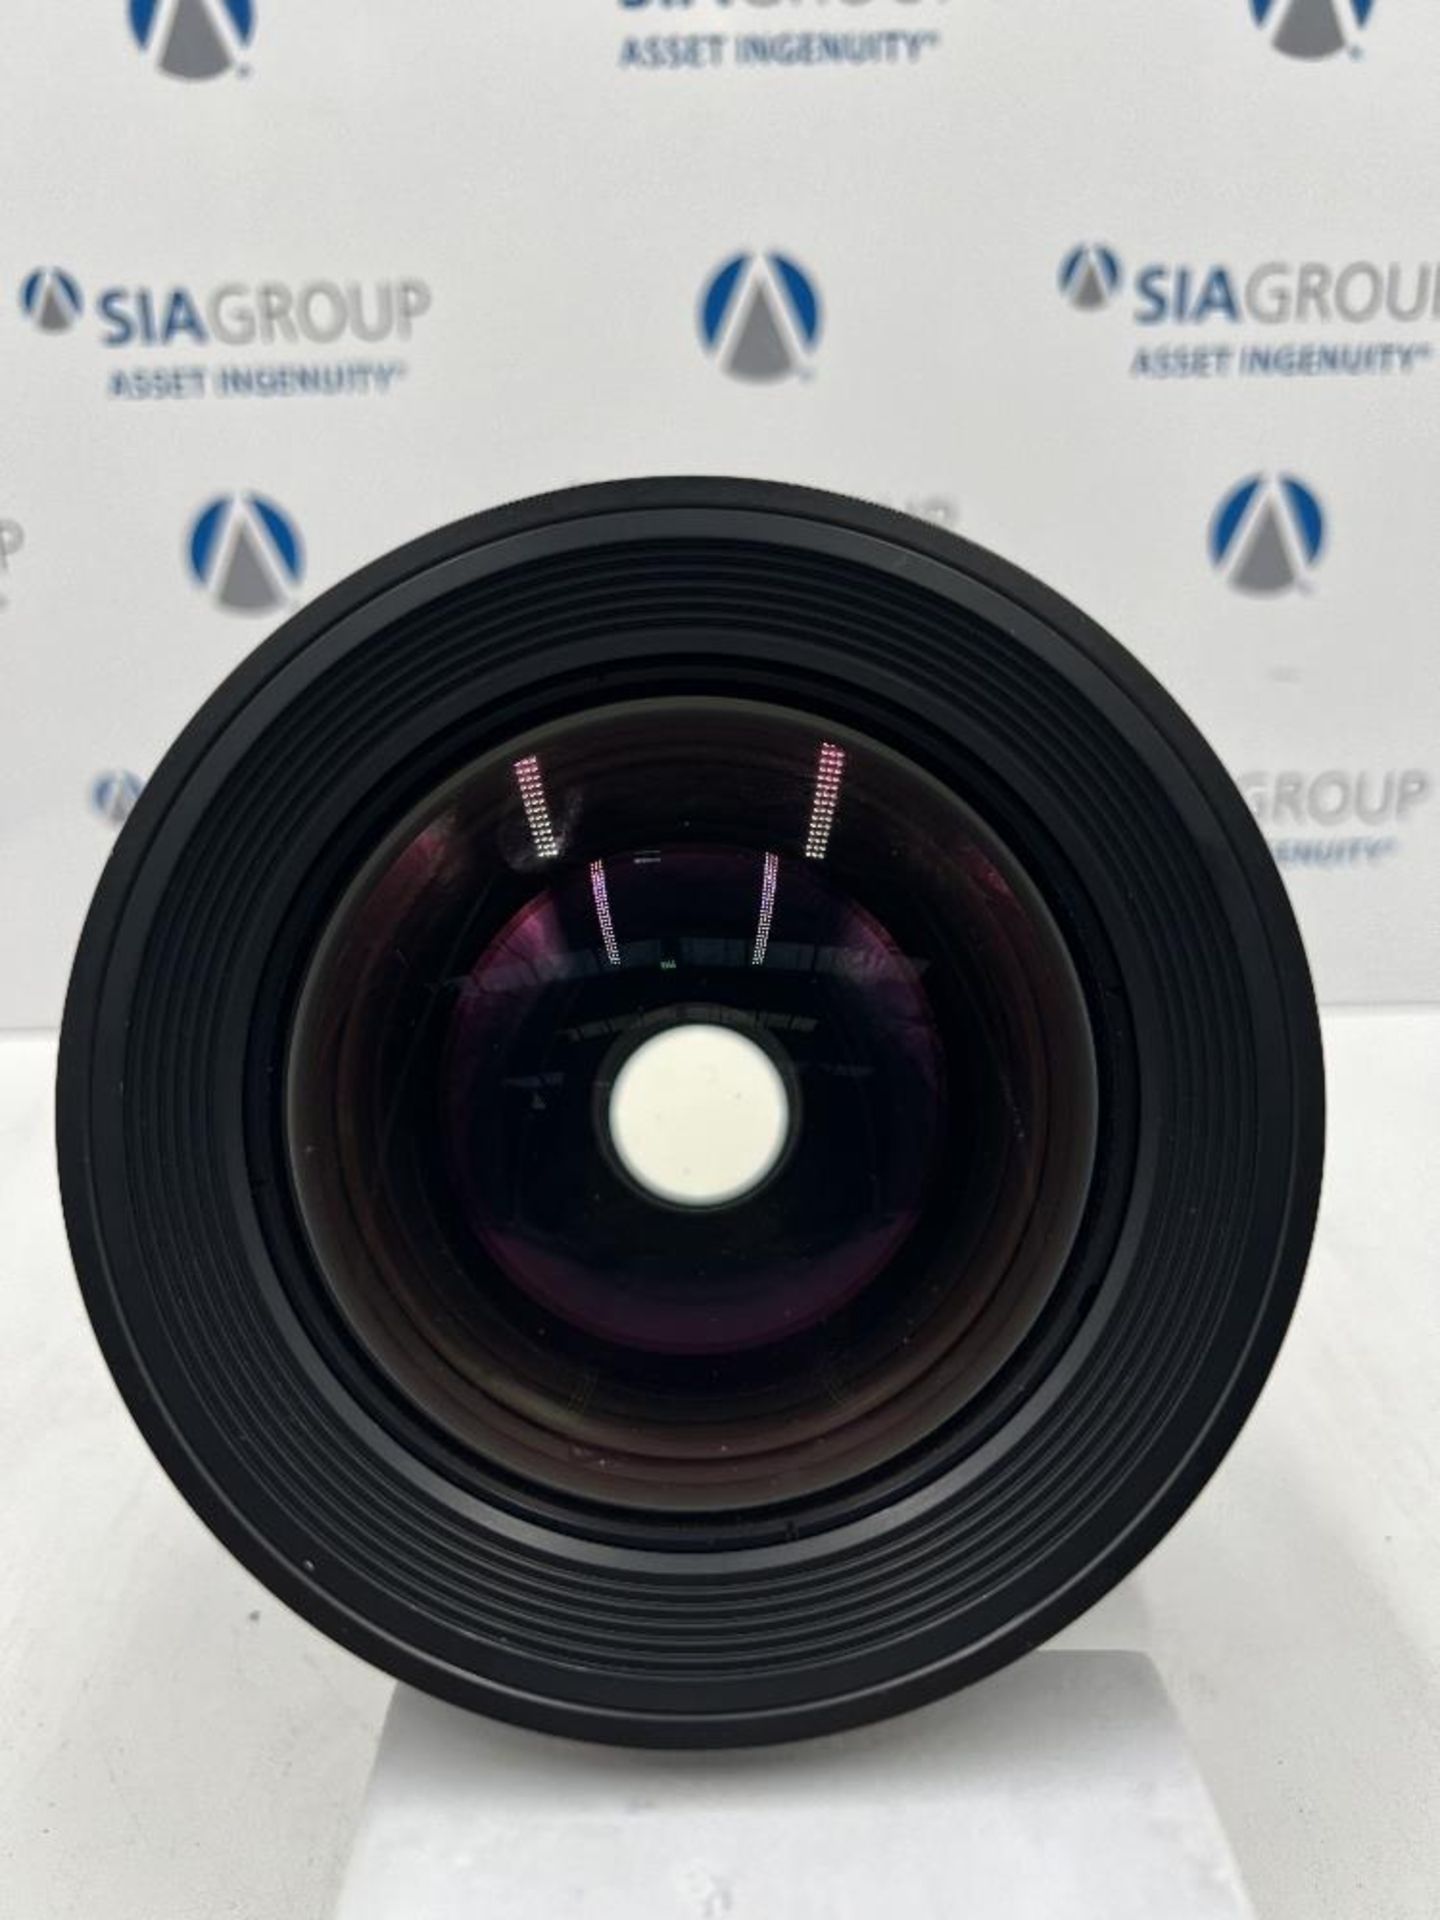 Panasonic ET-D75LE30 2.4-4.7 Projection Zoom Lens With Carrier Case - Image 5 of 7